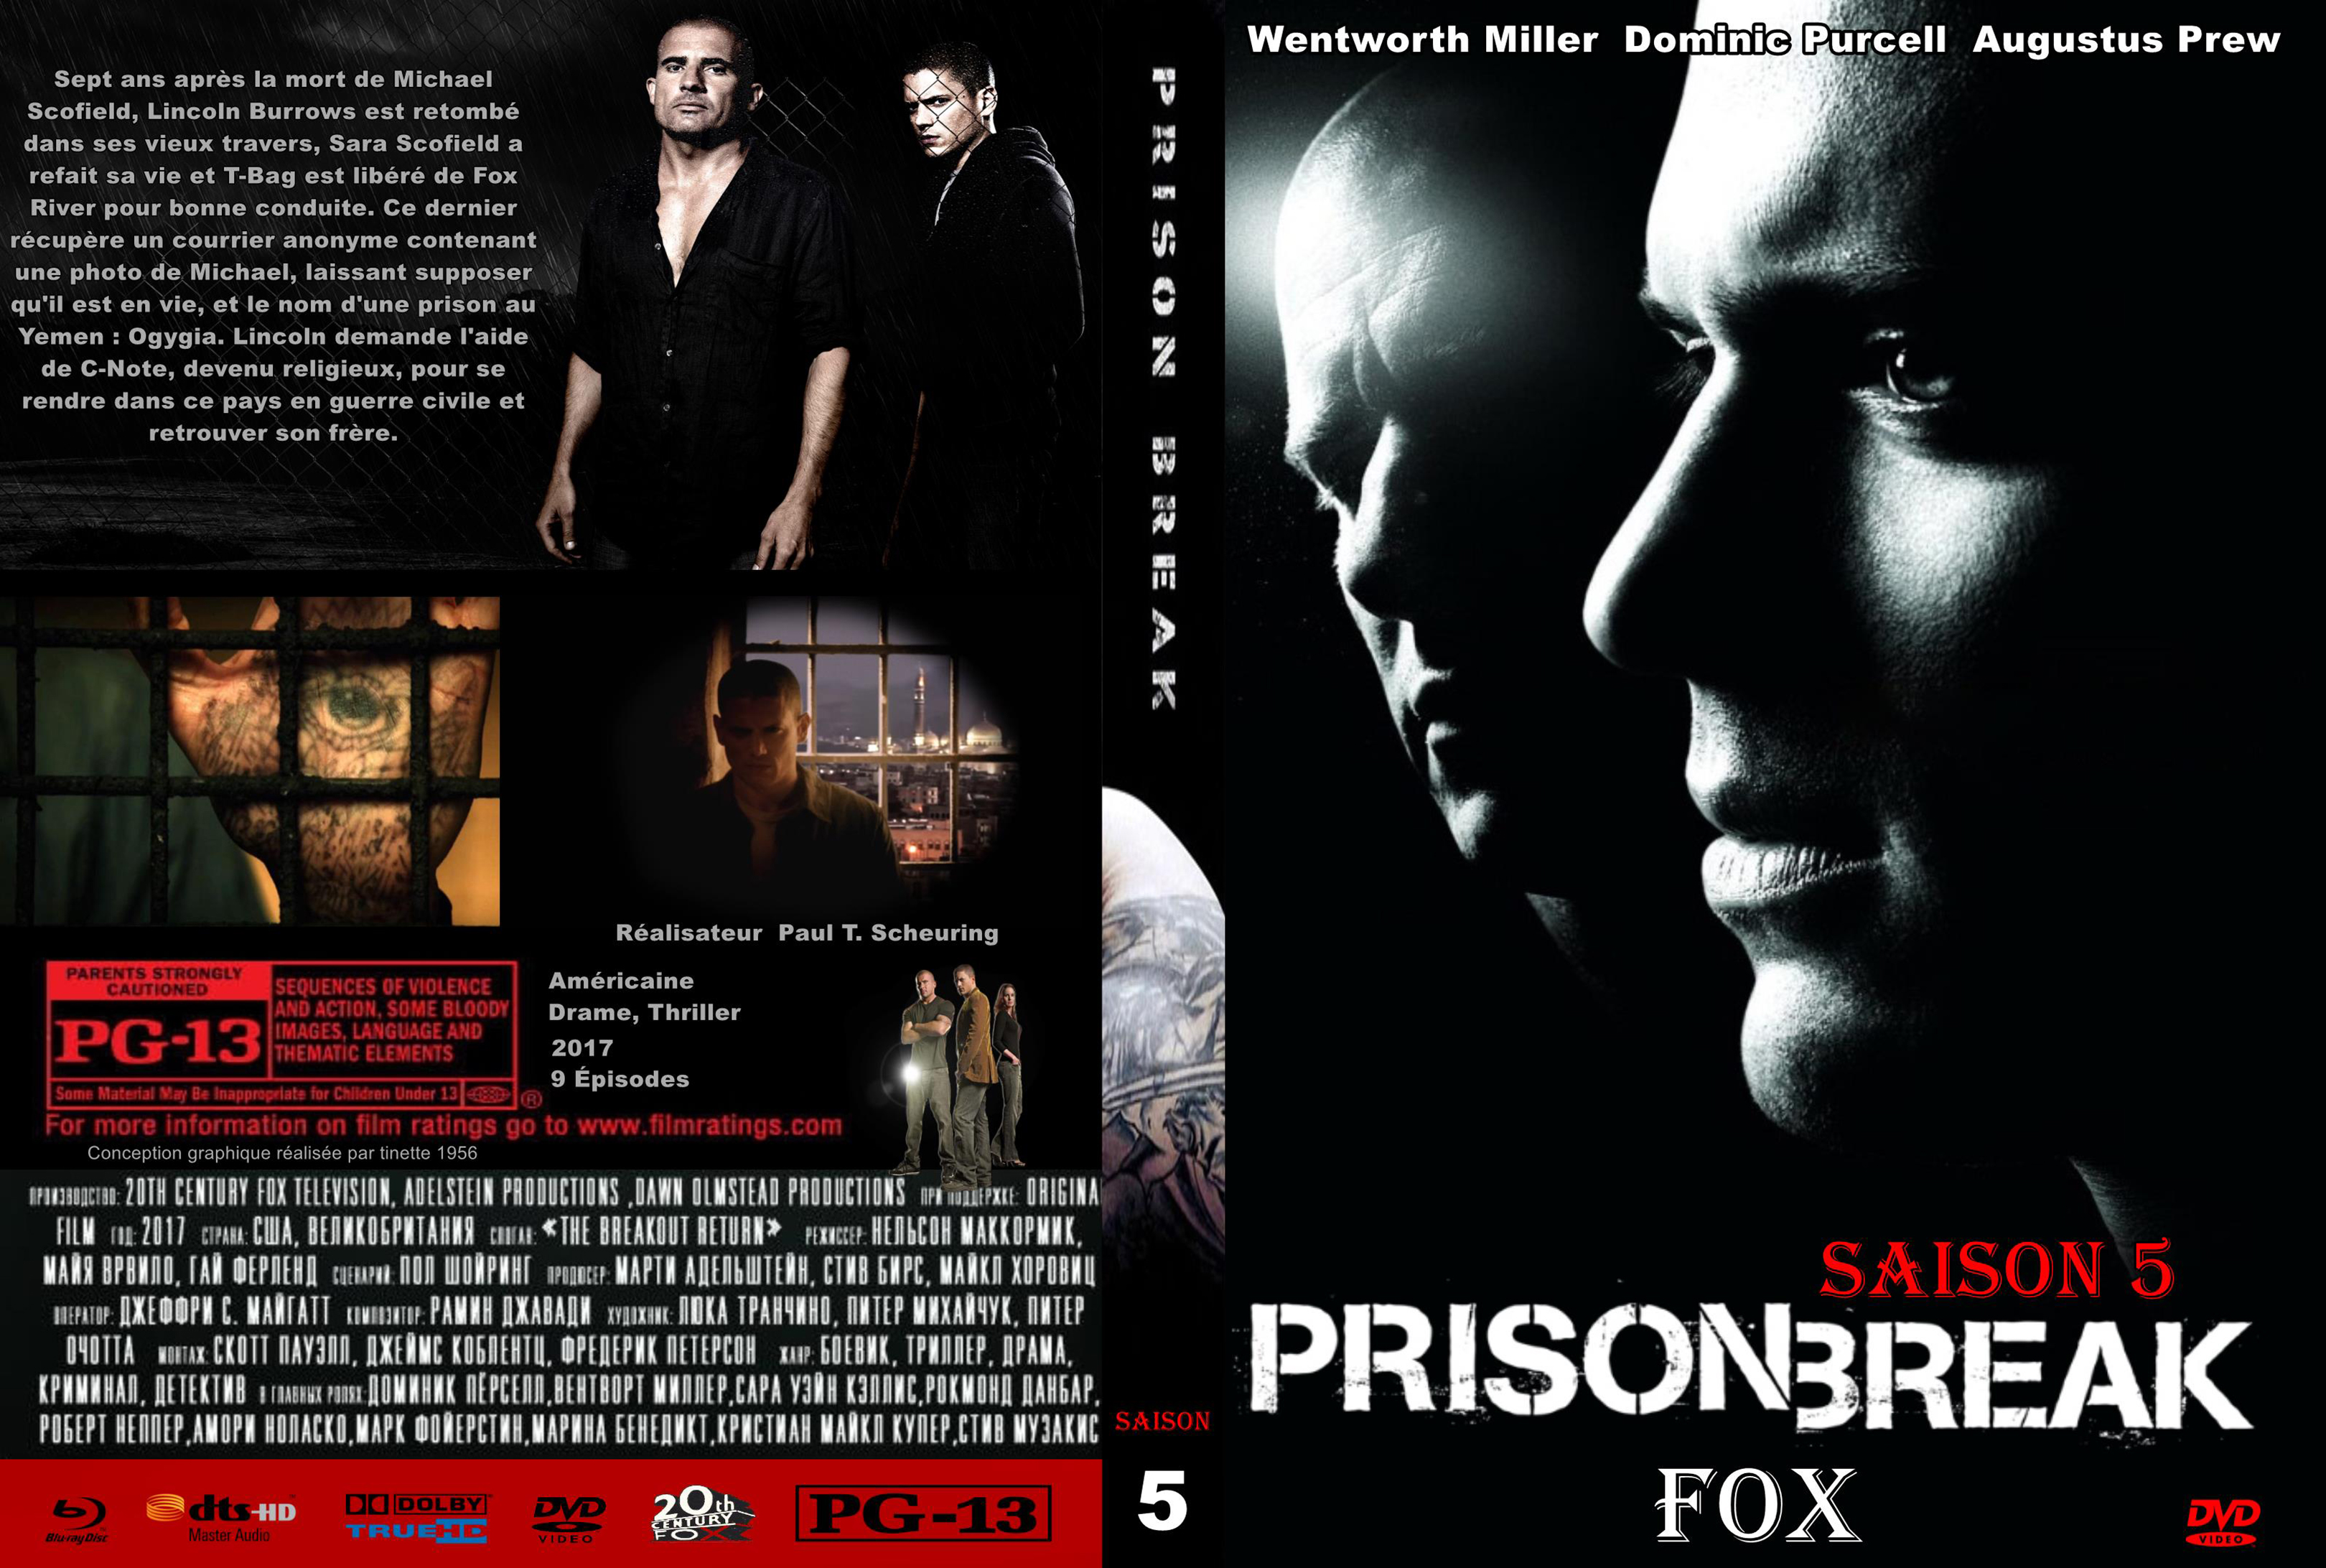 Jaquette DVD Prison break saison 5 custom